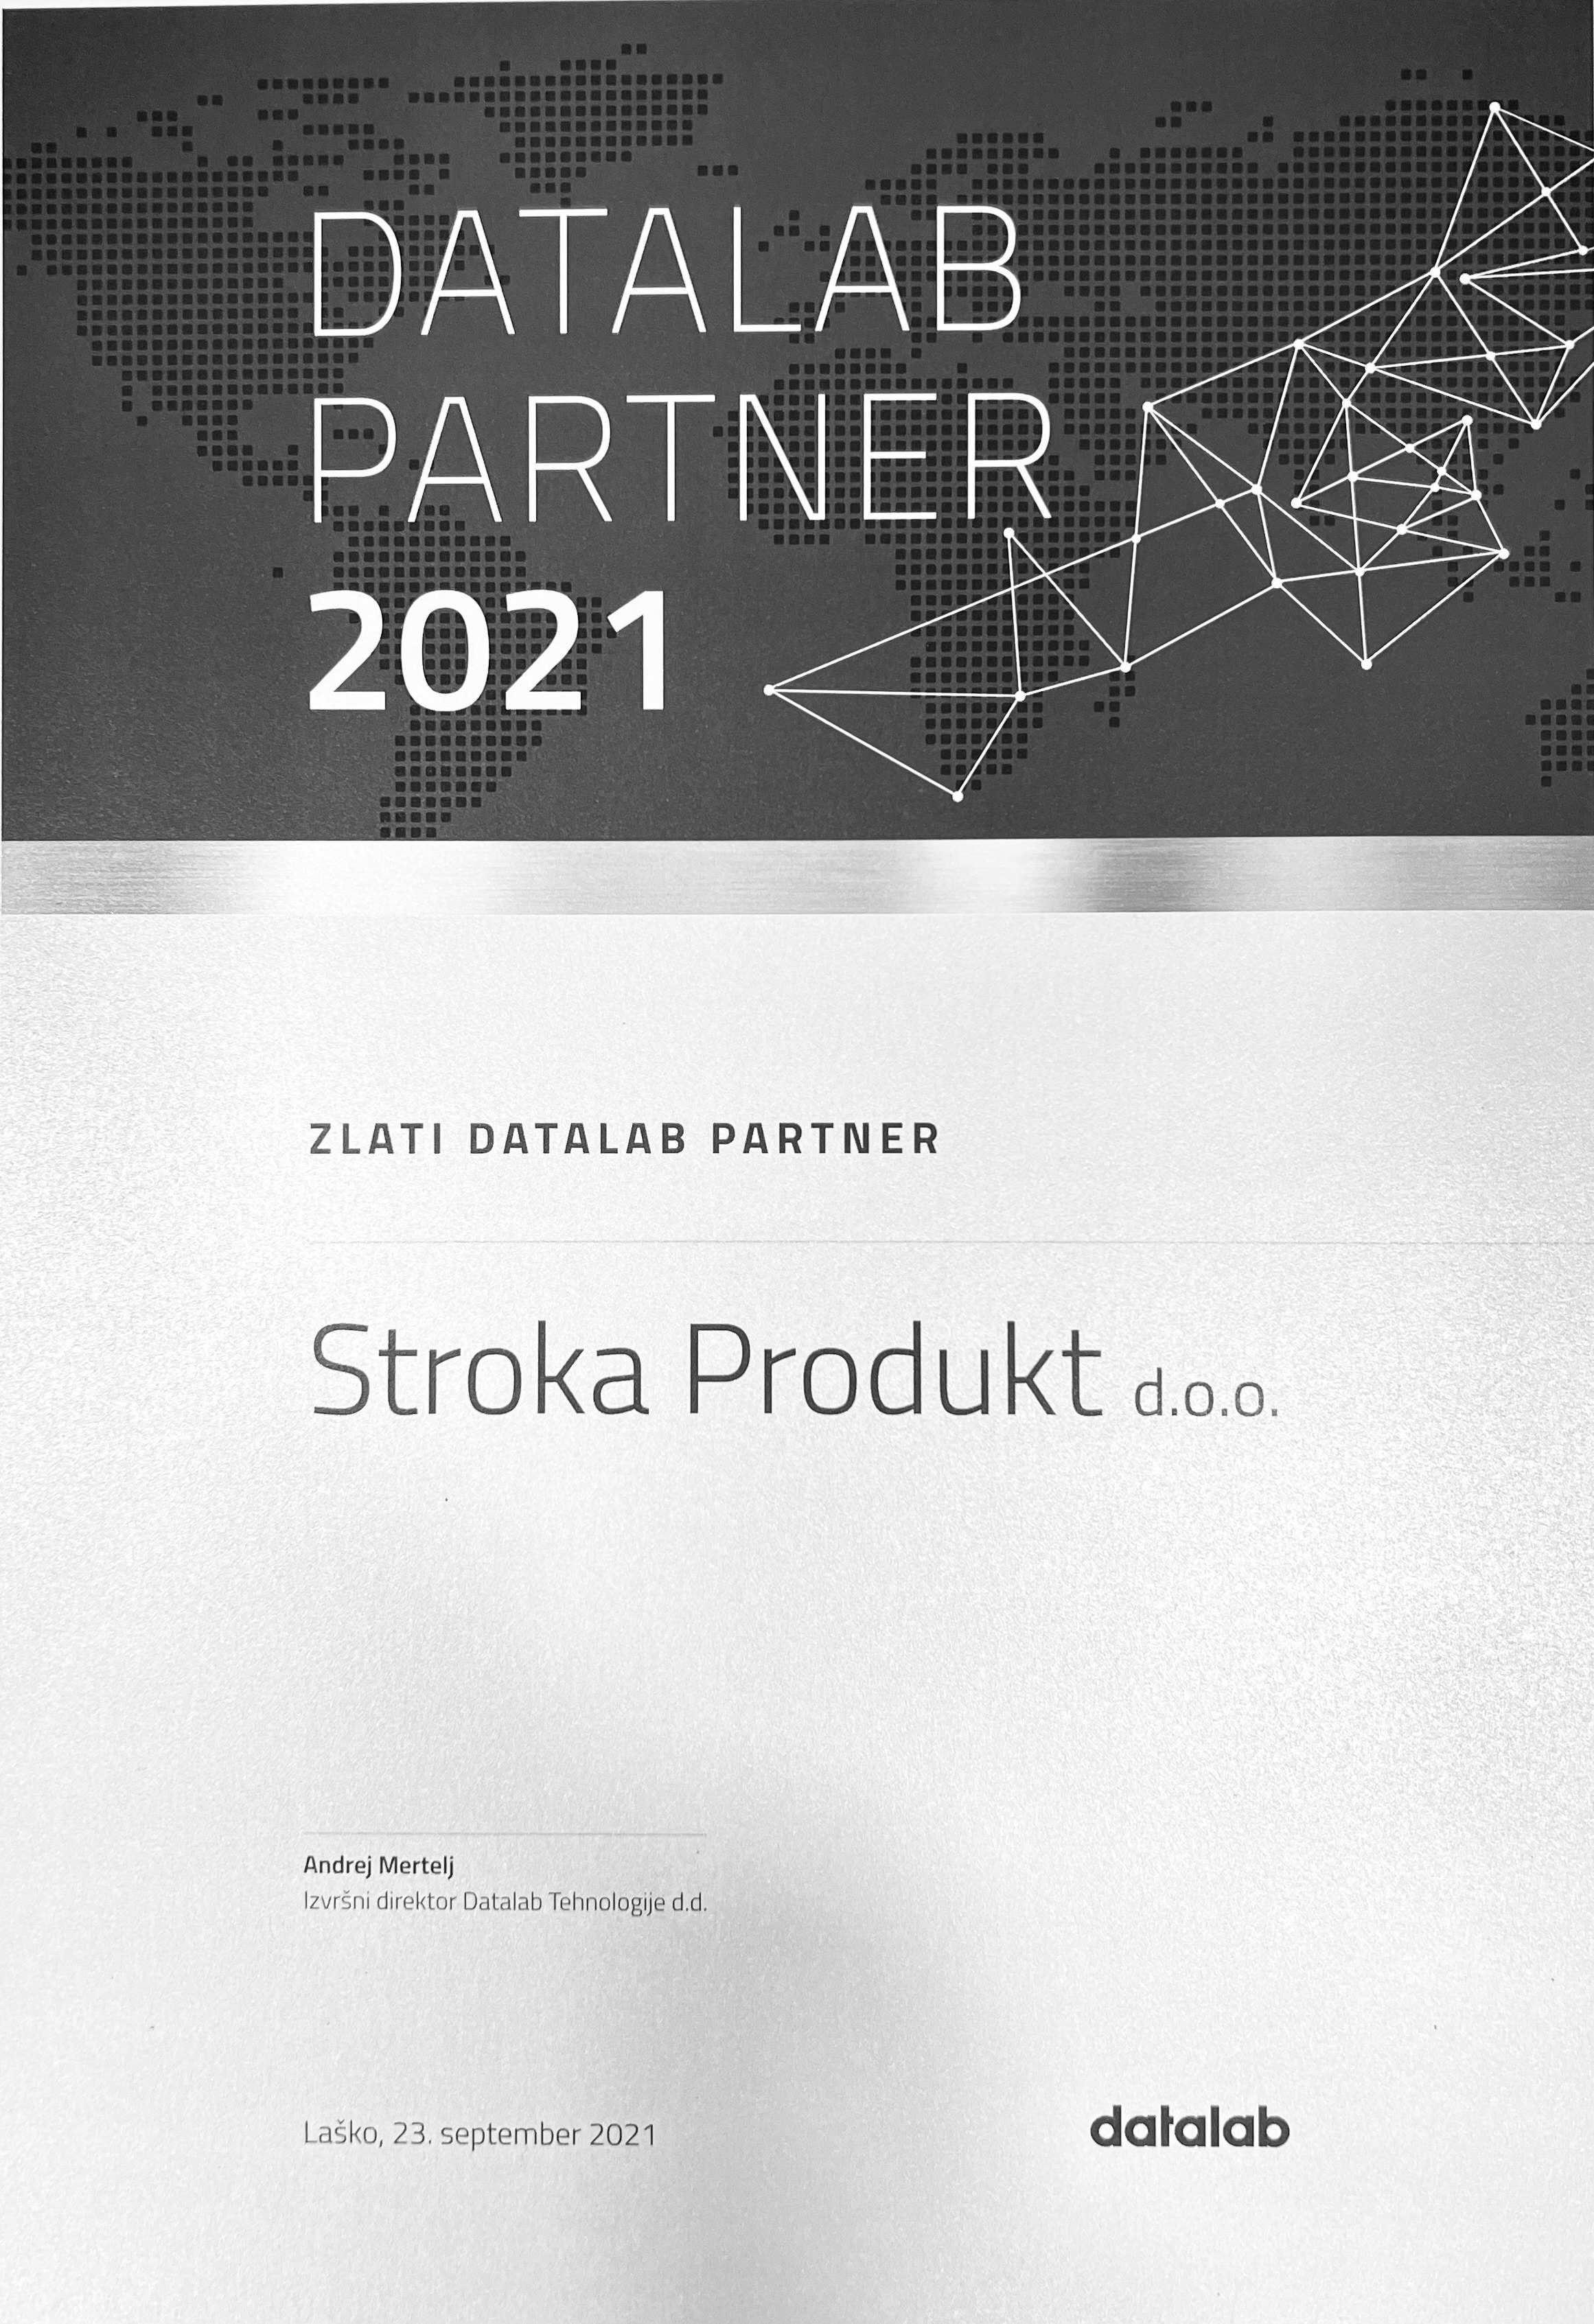 Datalab partner leta 2021